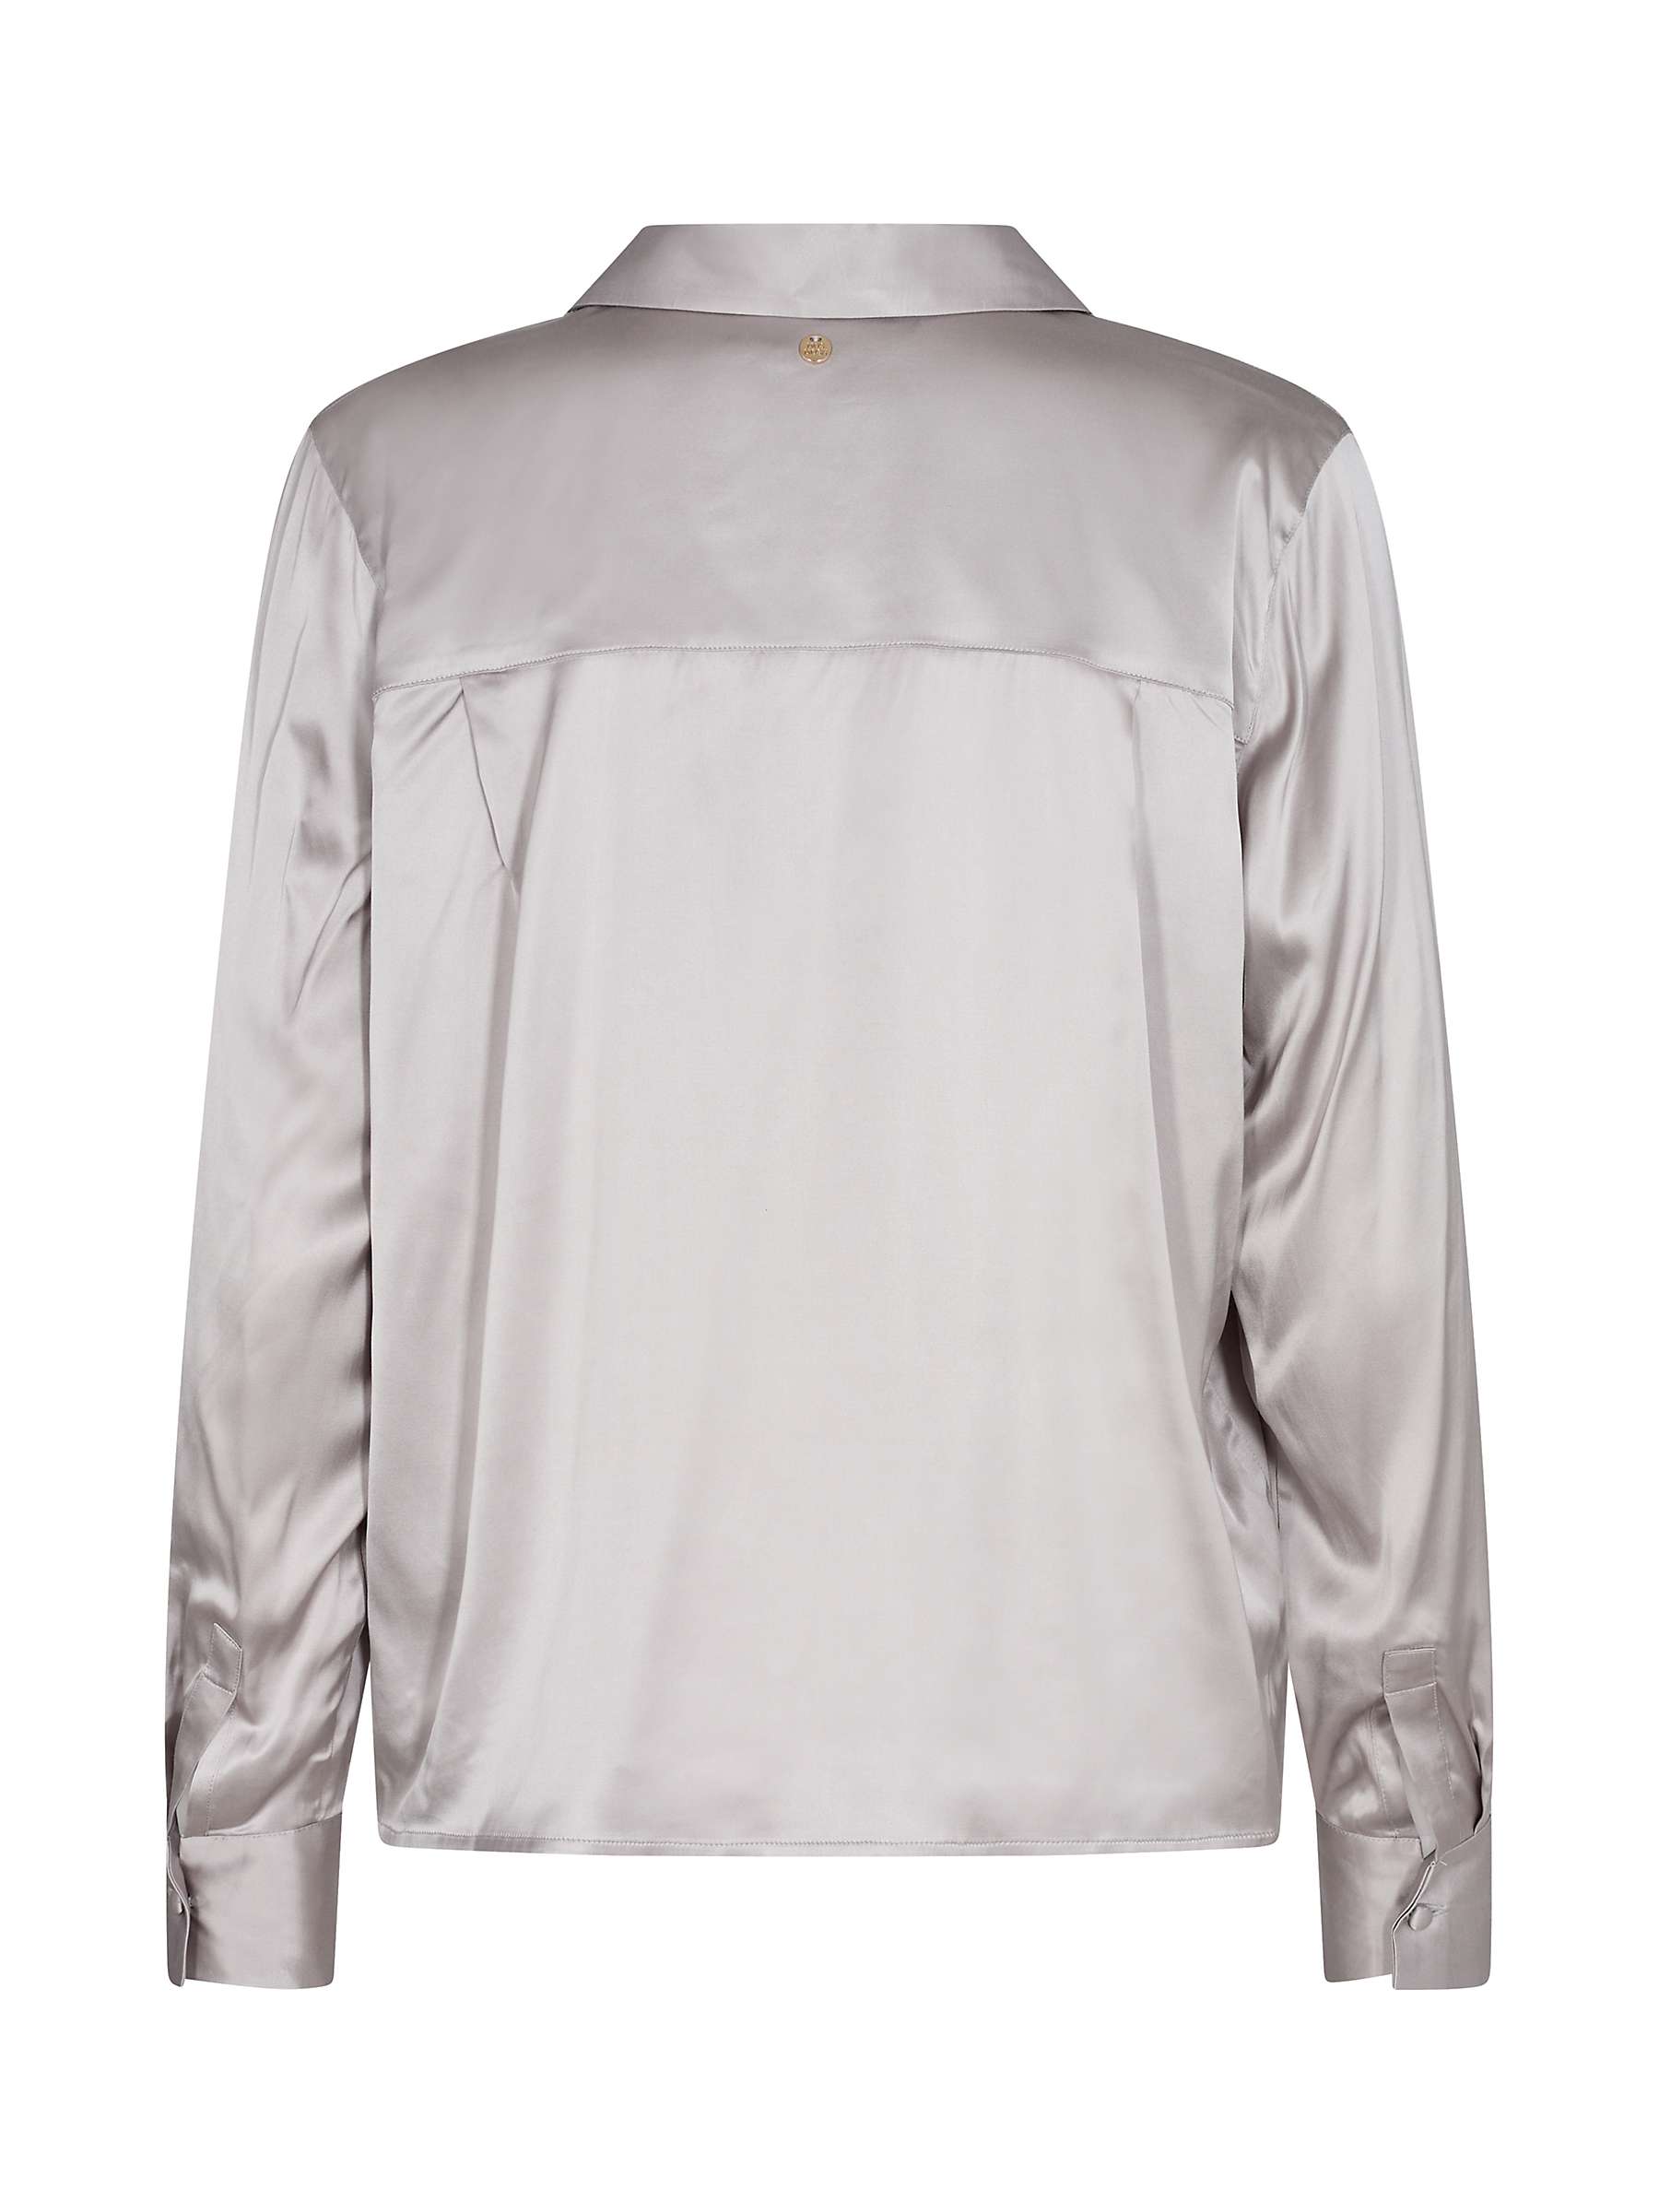 Buy MOS MOSH Finley Satin Shirt, Quiet Gray Online at johnlewis.com